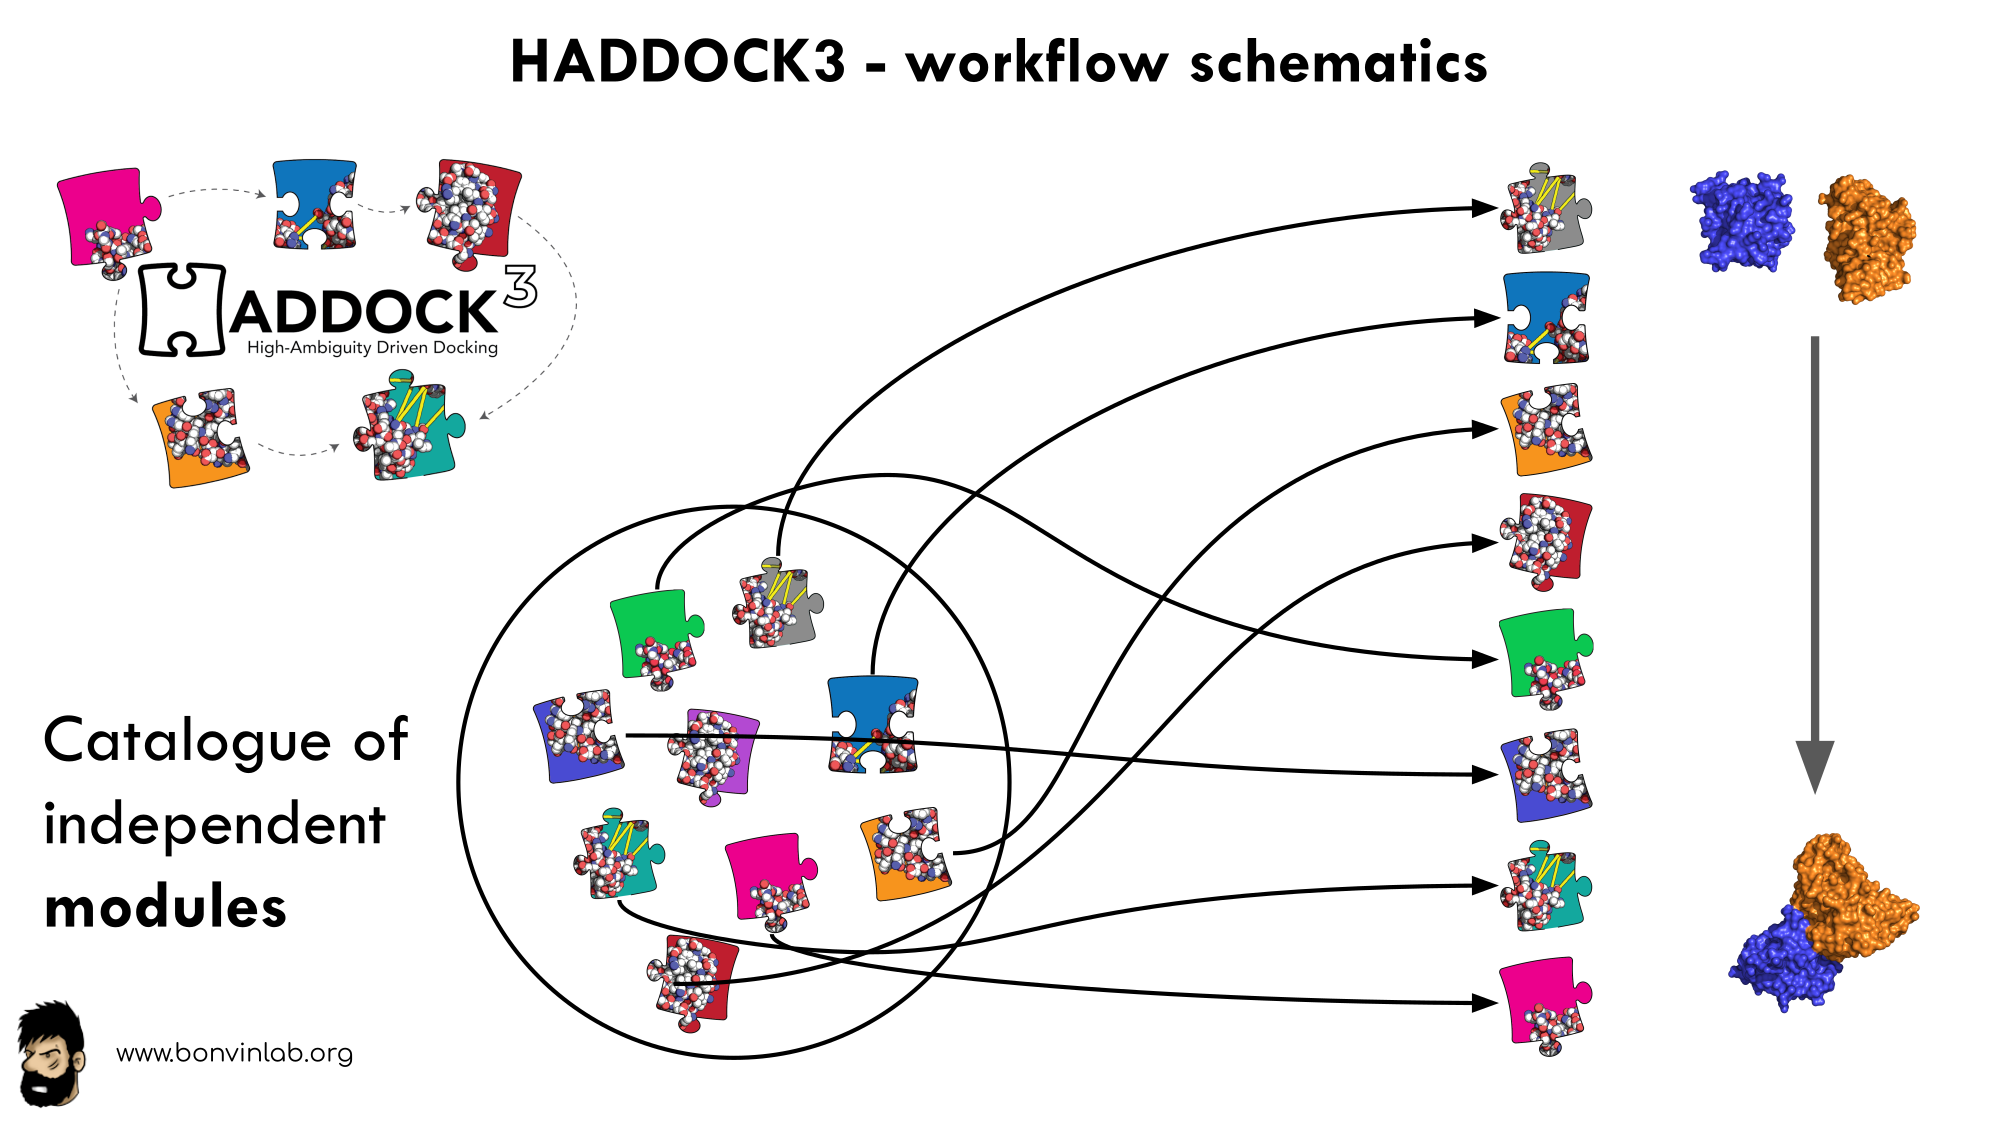 HADDOCK3 workflow